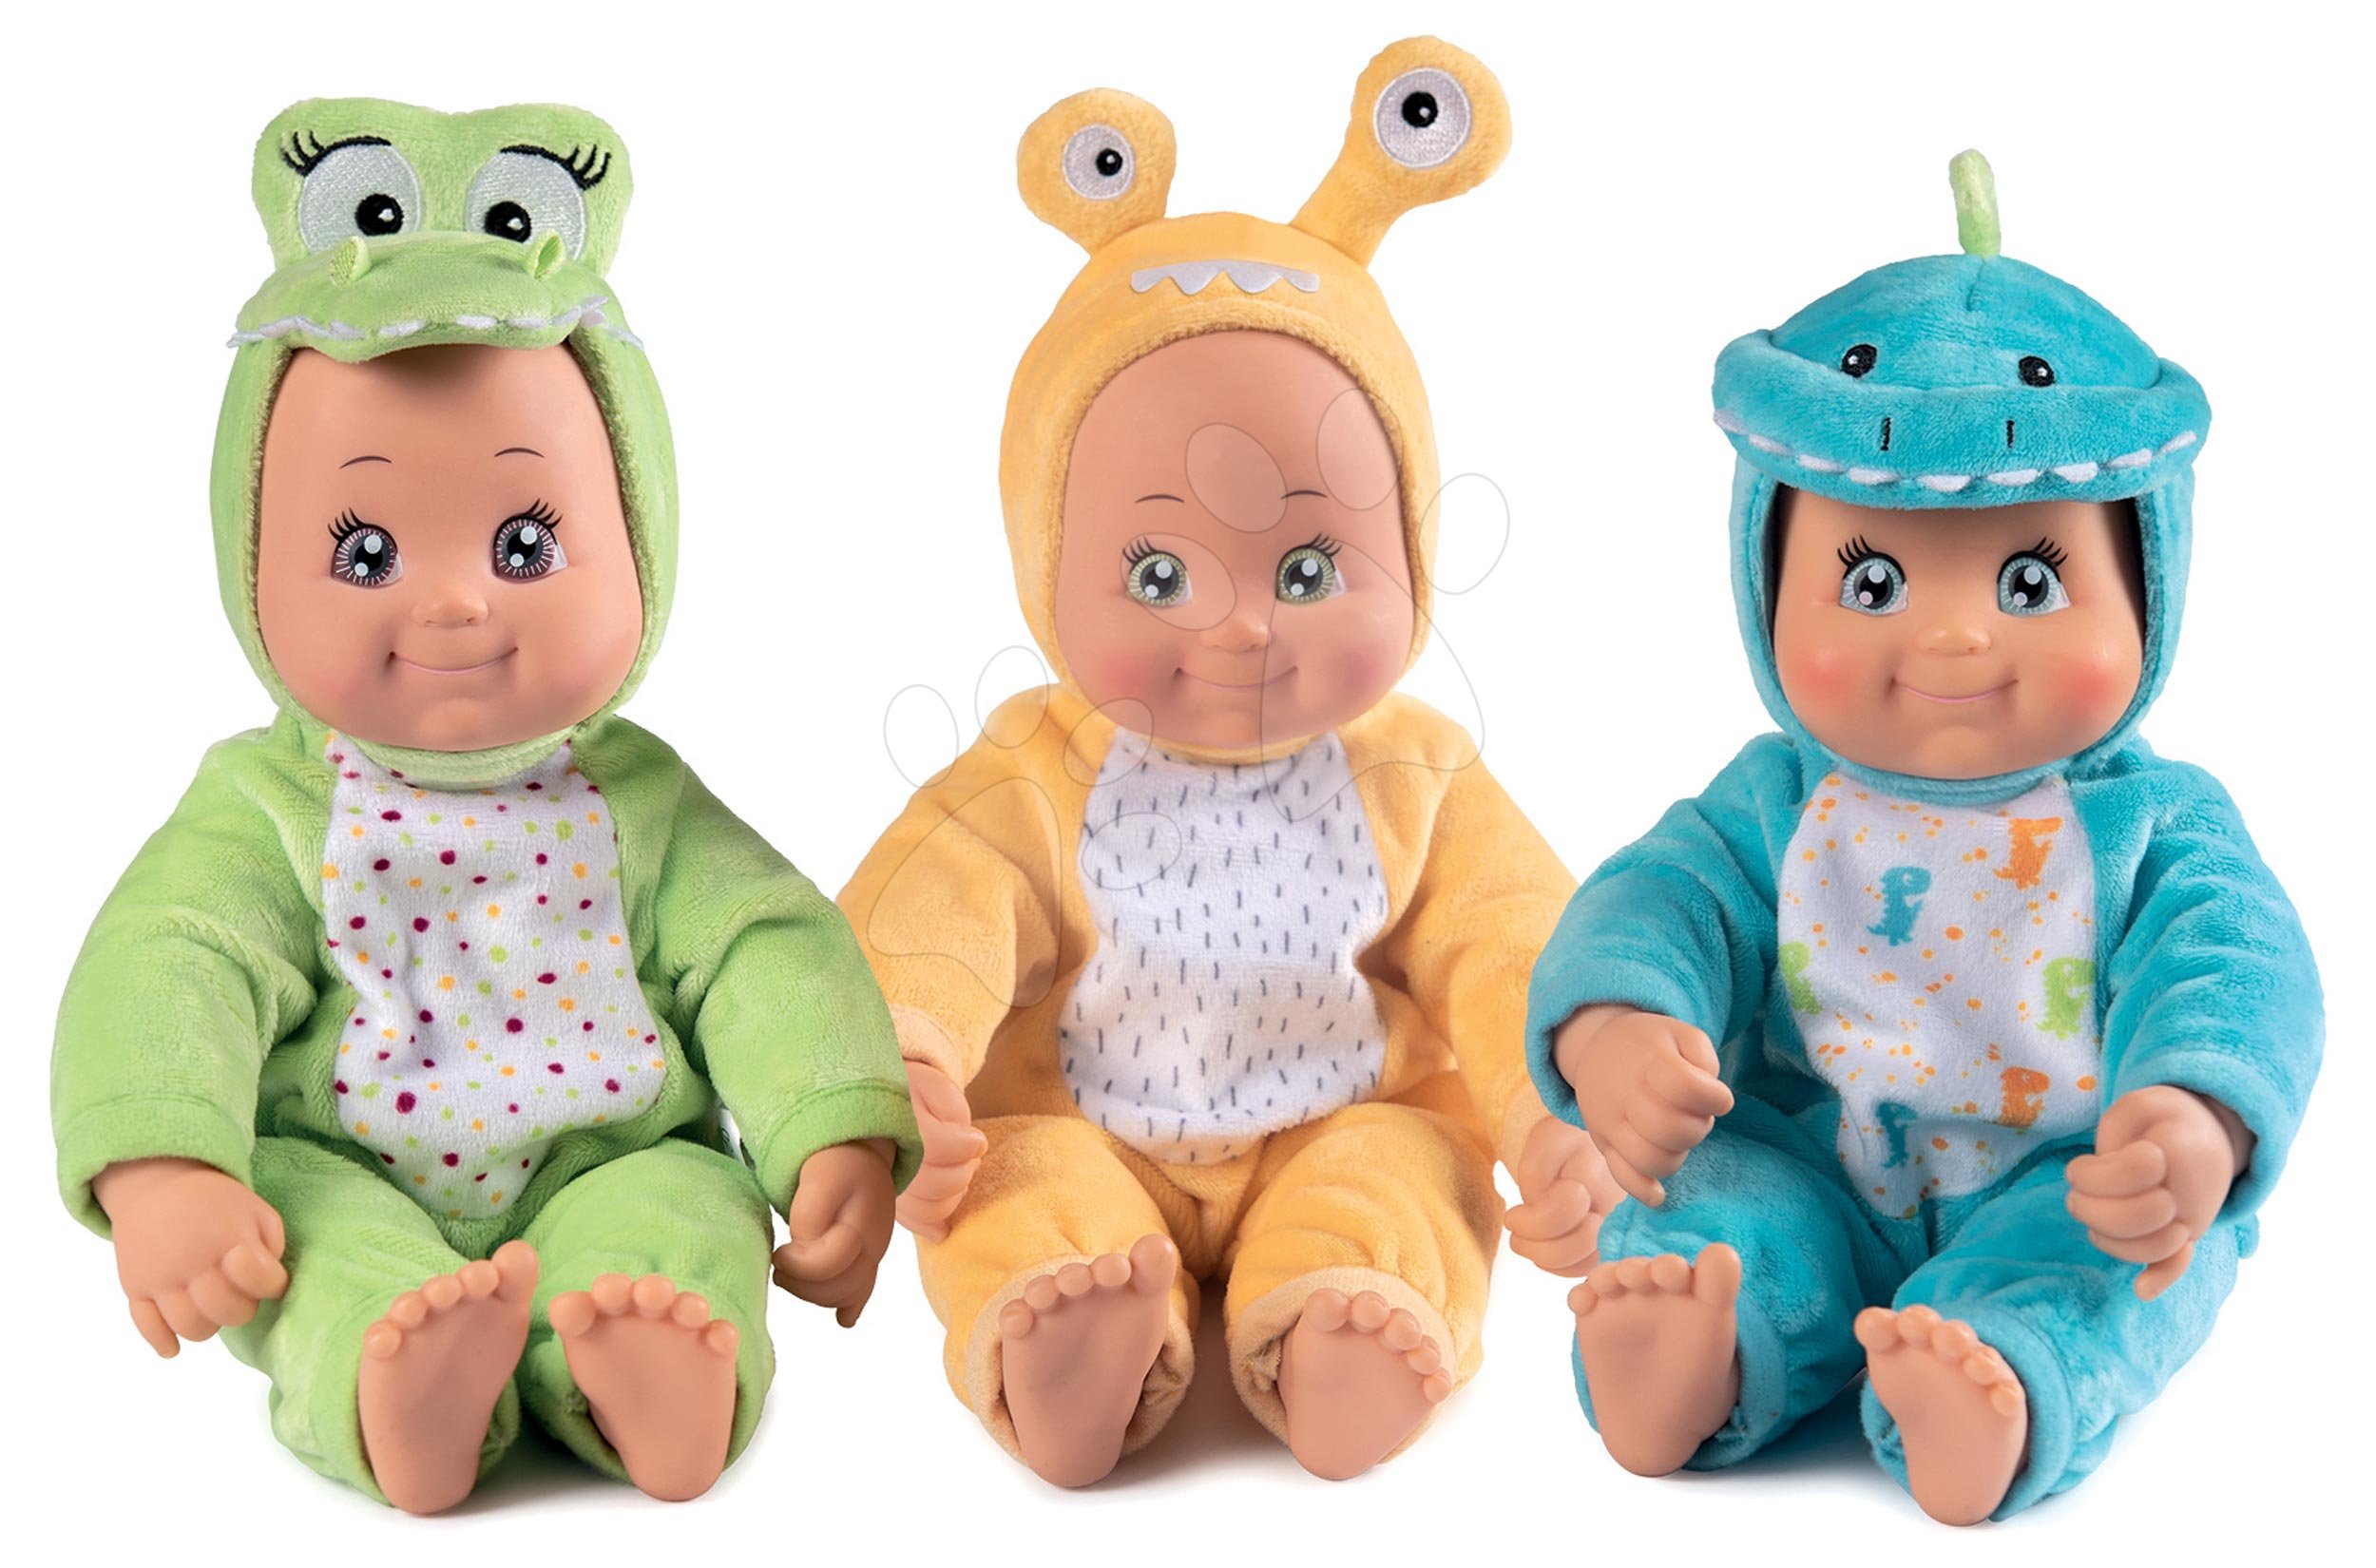 Igrače dojenčki od 9. meseca - Dojenčki v kostumih Krokodil Polžek Dinozaver MiniKiss Croc Smoby z zvokom 'cmok' in mehkim trebuščkom 3 kom od 12 mes